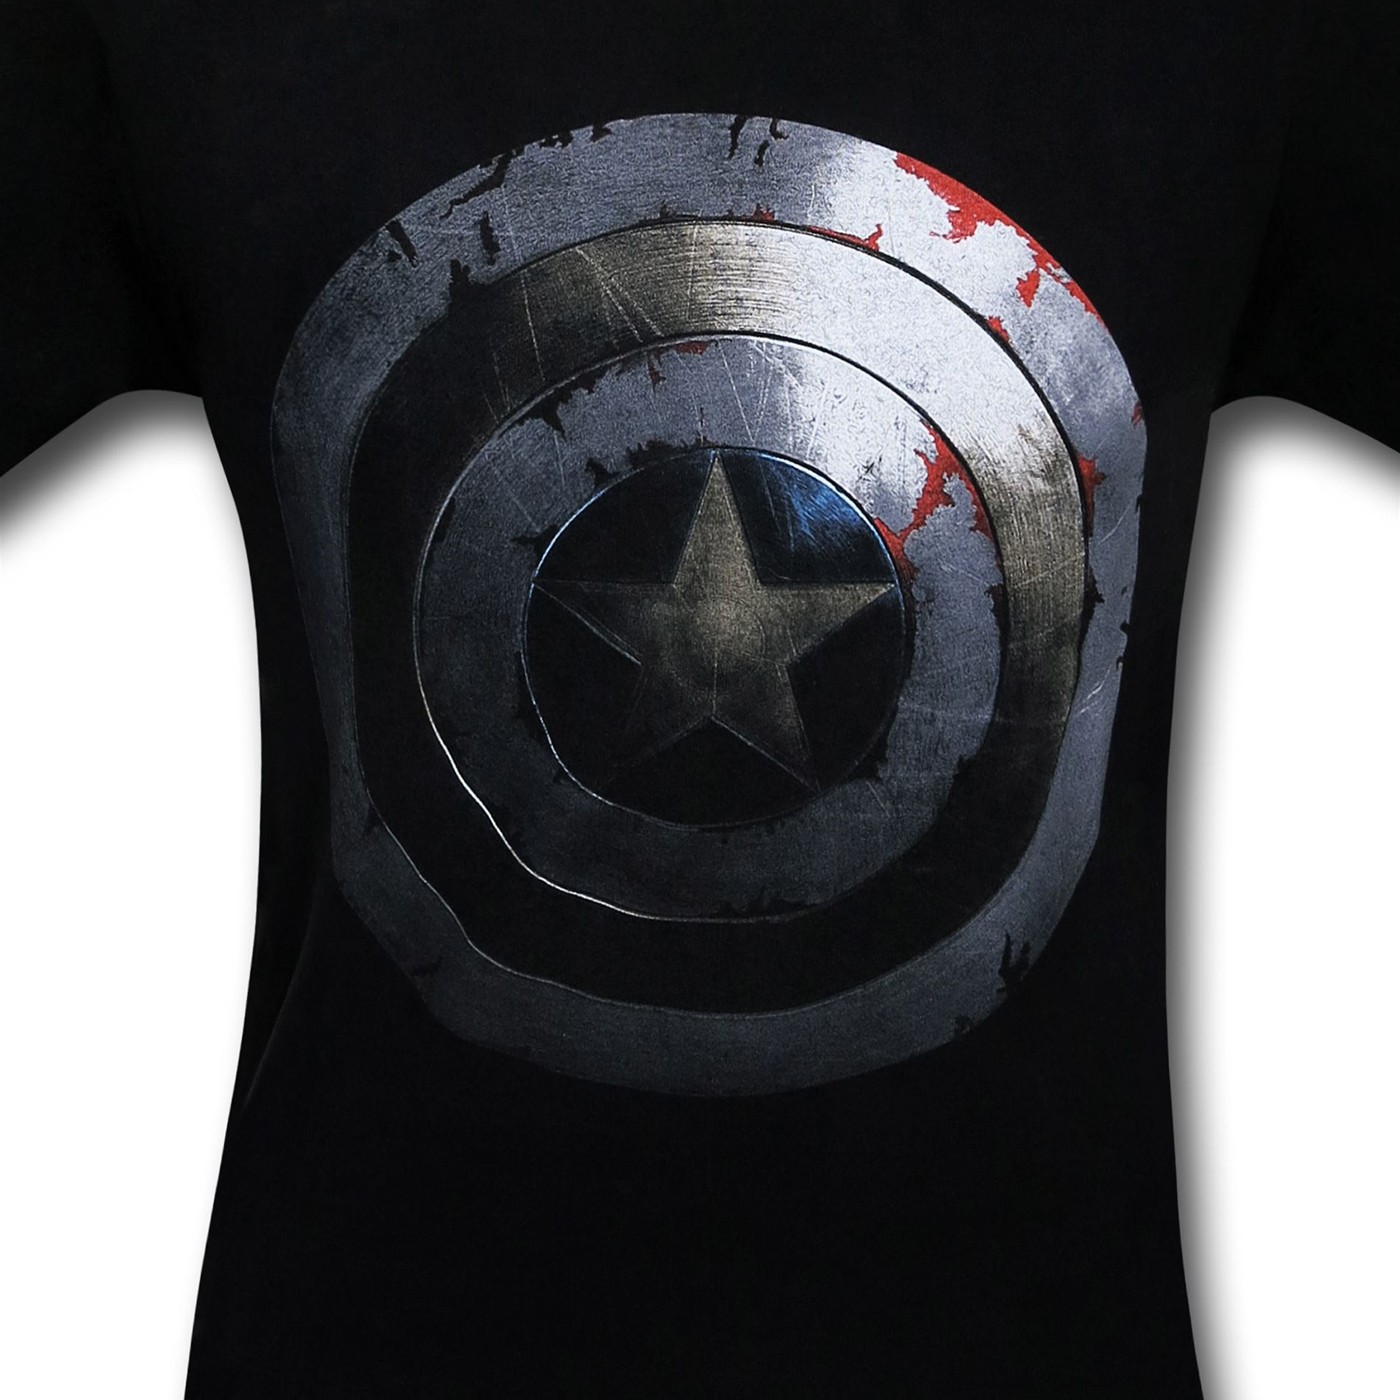 Captain America Beaten Shield Black T-Shirt